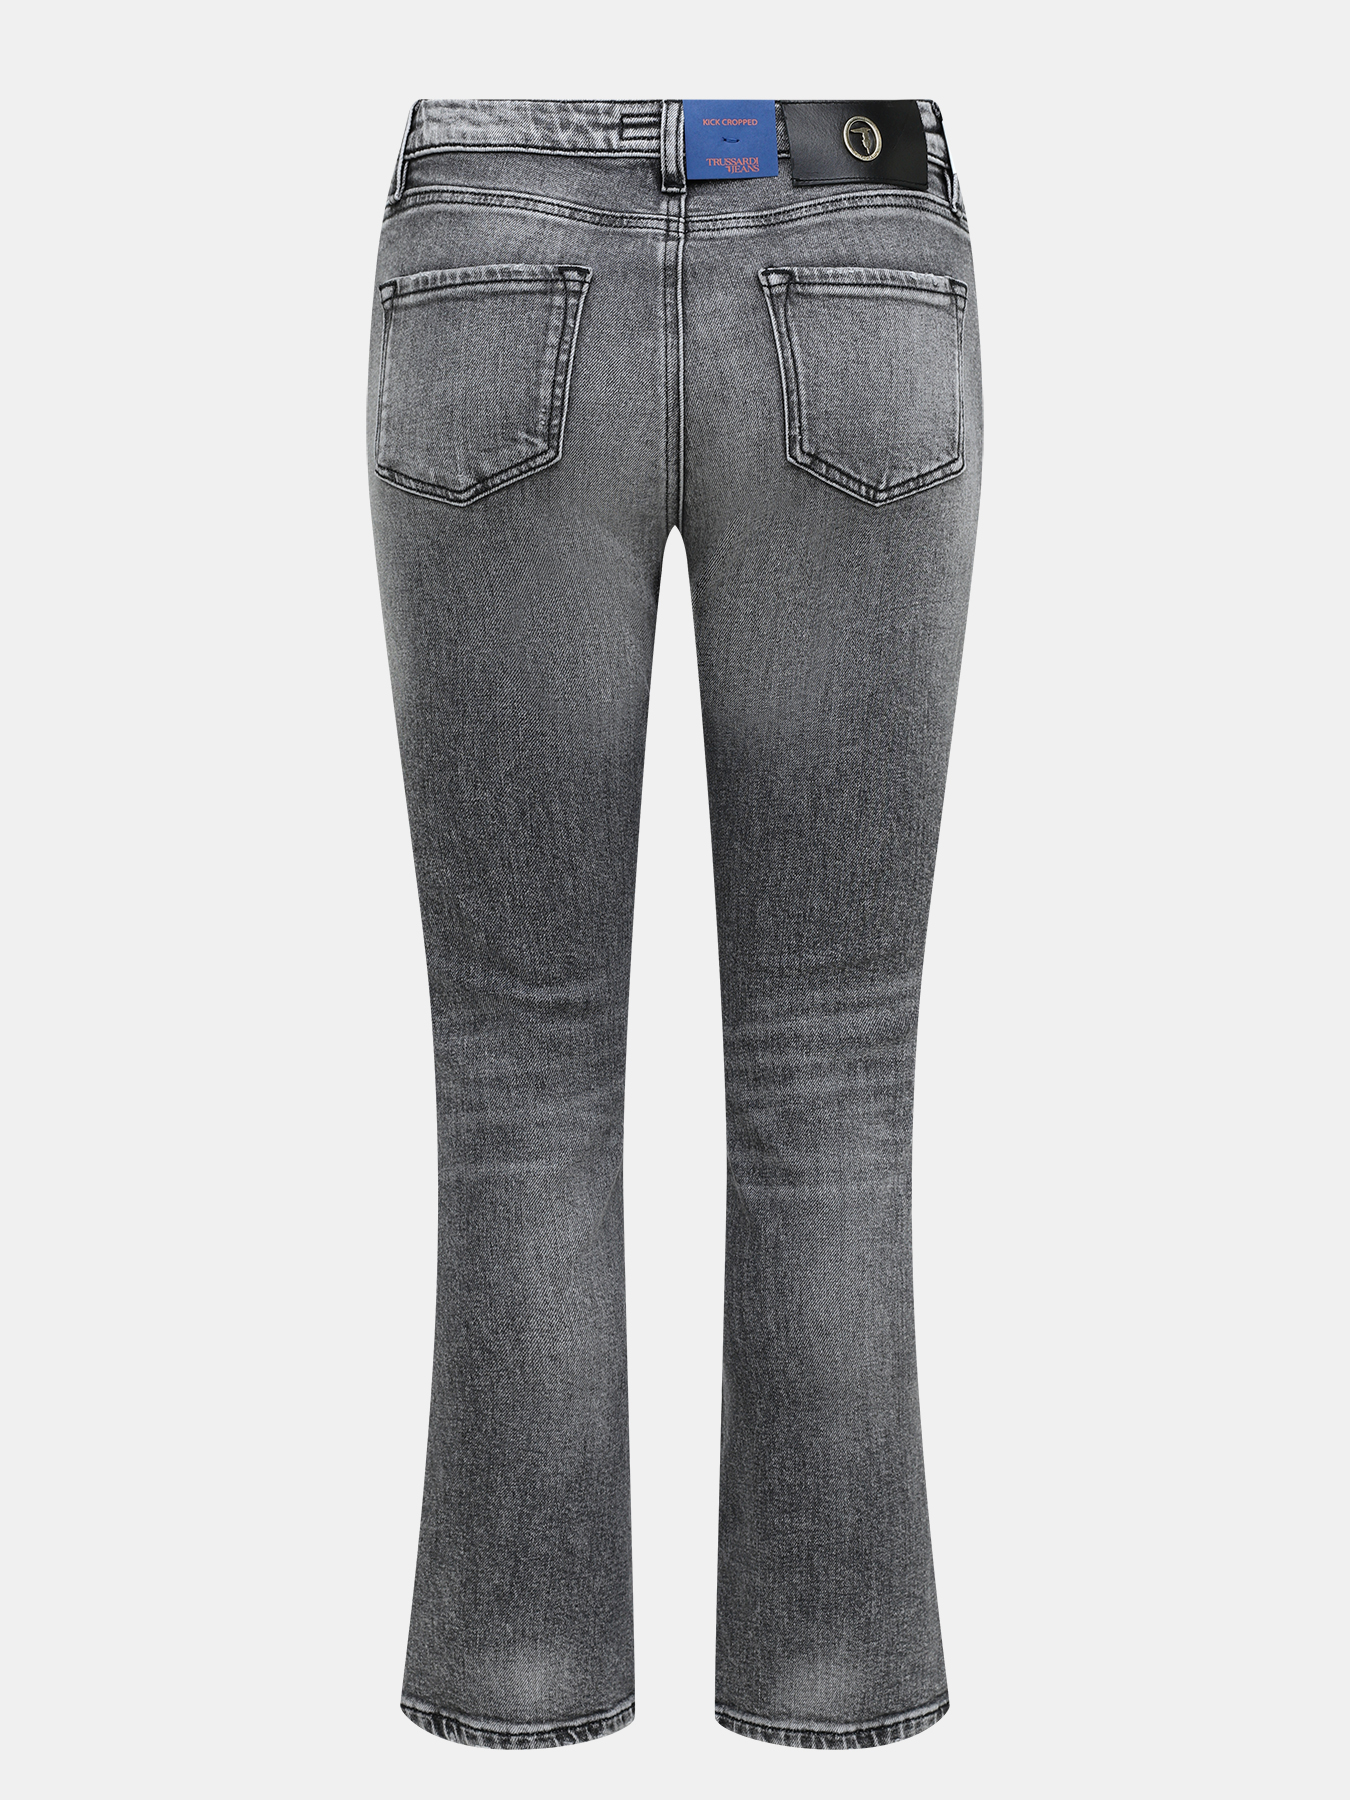 Mixed jeans. Trussardi Jeans. Серые джинсы женские. Джинсы женские серые с замками. Джинсы ниже колена женские.